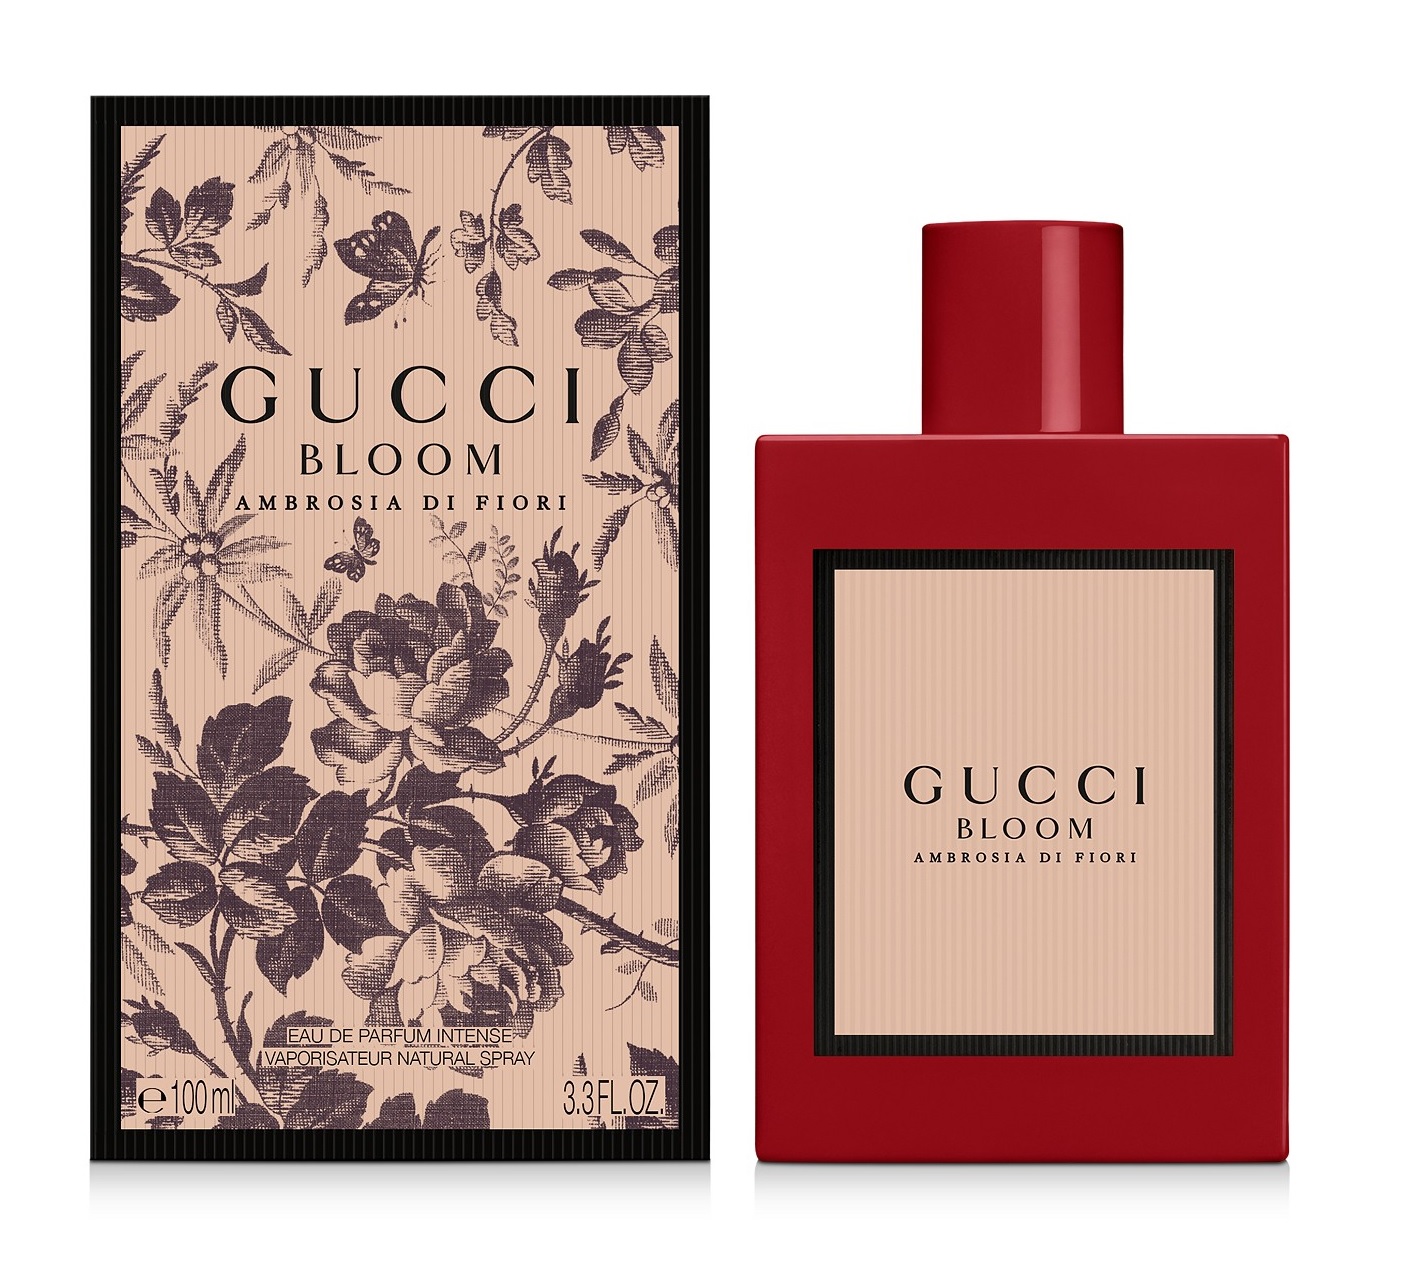 Gucci Bloom Ambrosia Di Fiori نظرة فاحصة على الإصدار الجديد من Gucci للنساء مقالات عن العطور